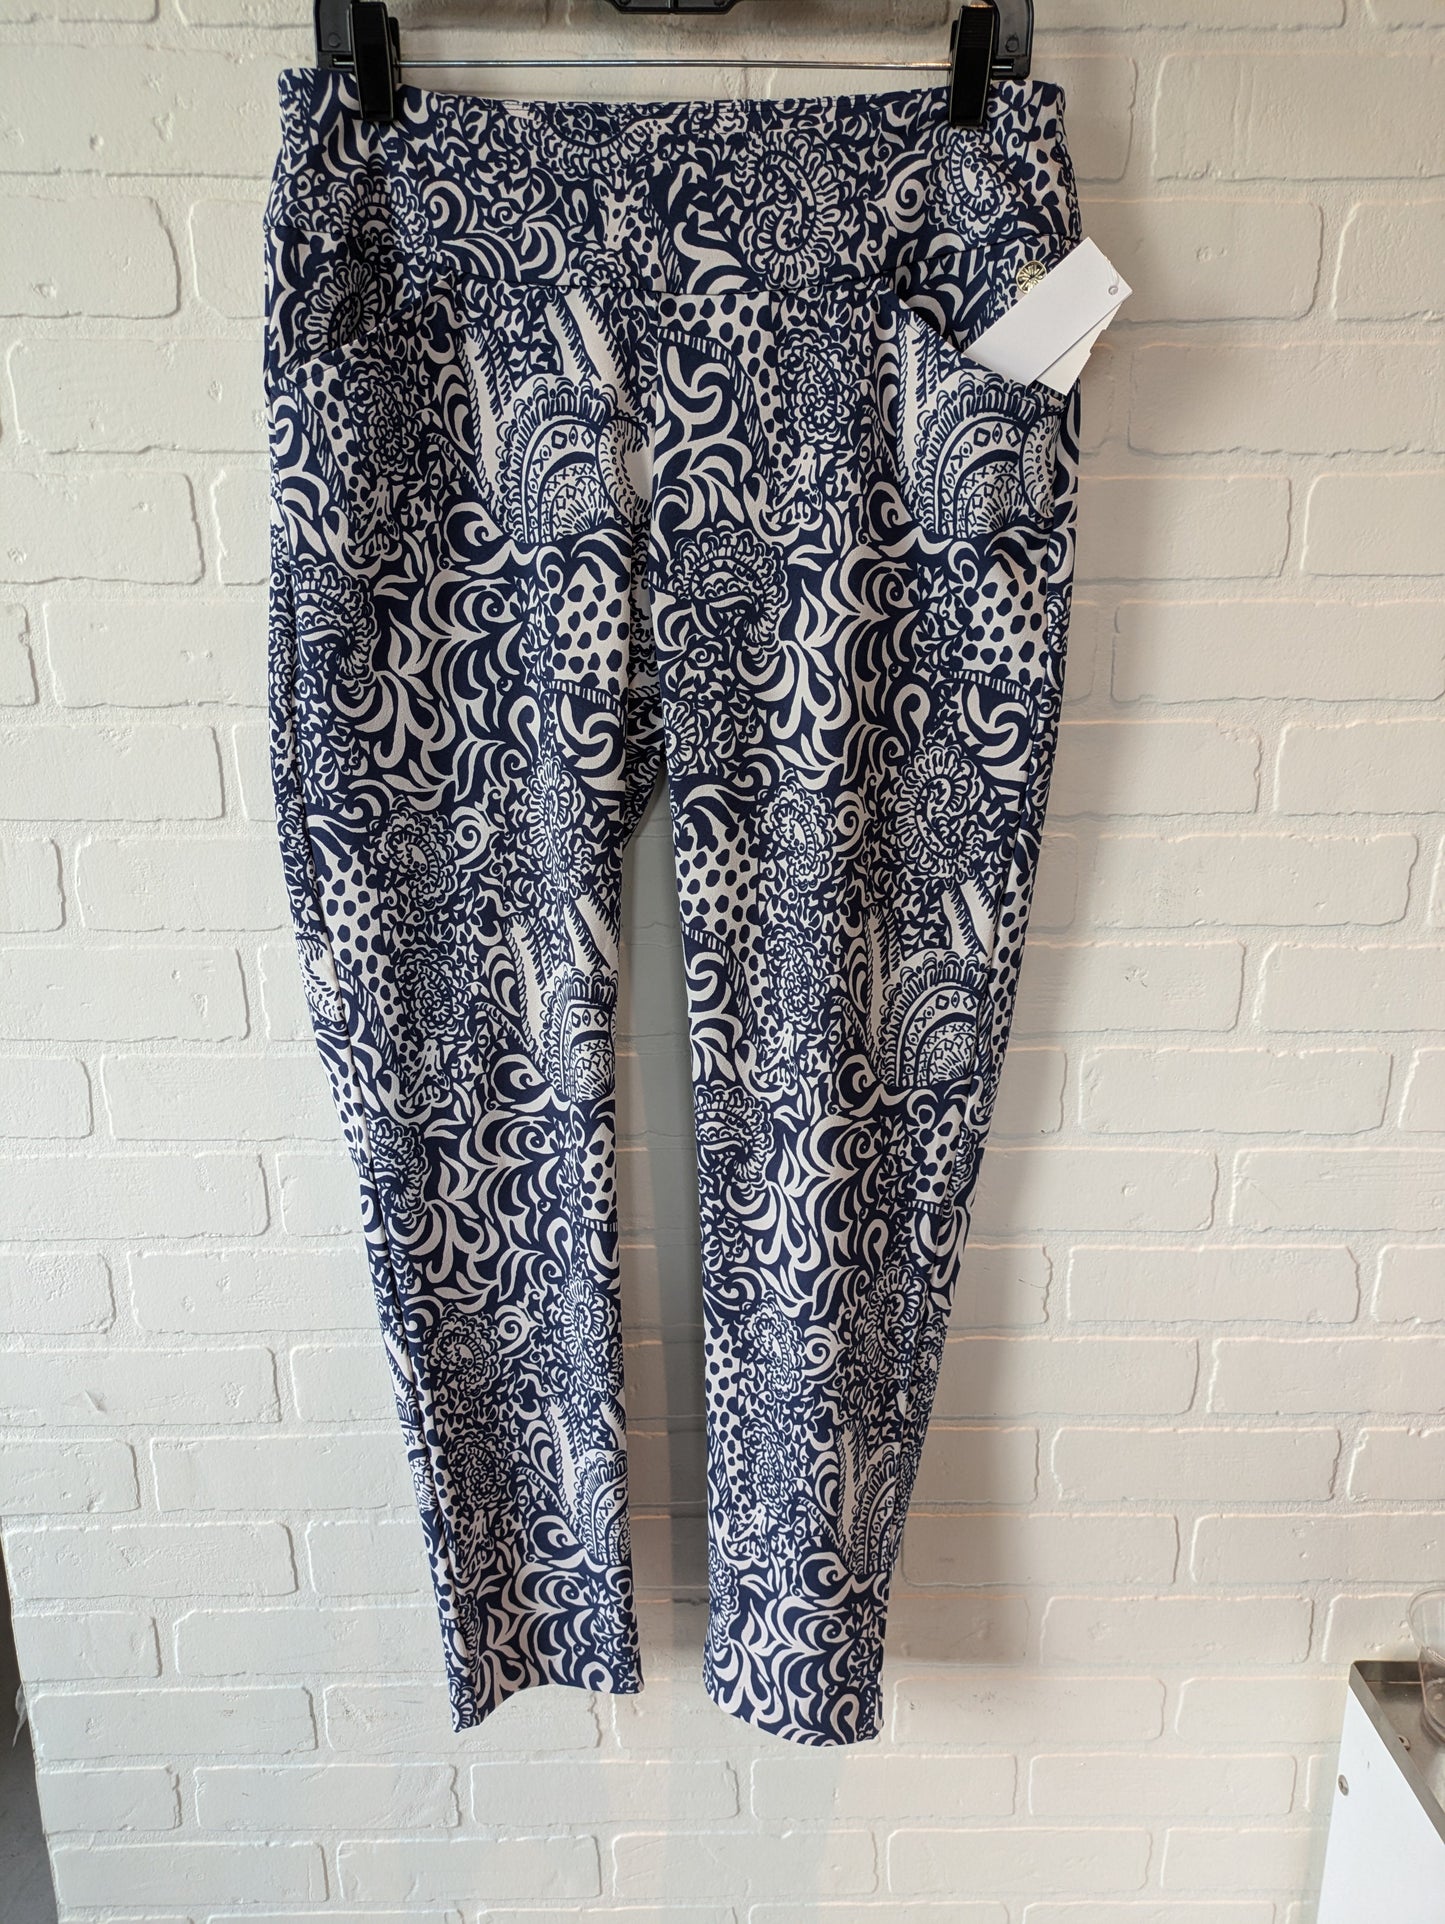 Blue & White Pants Designer Lilly Pulitzer, Size 10